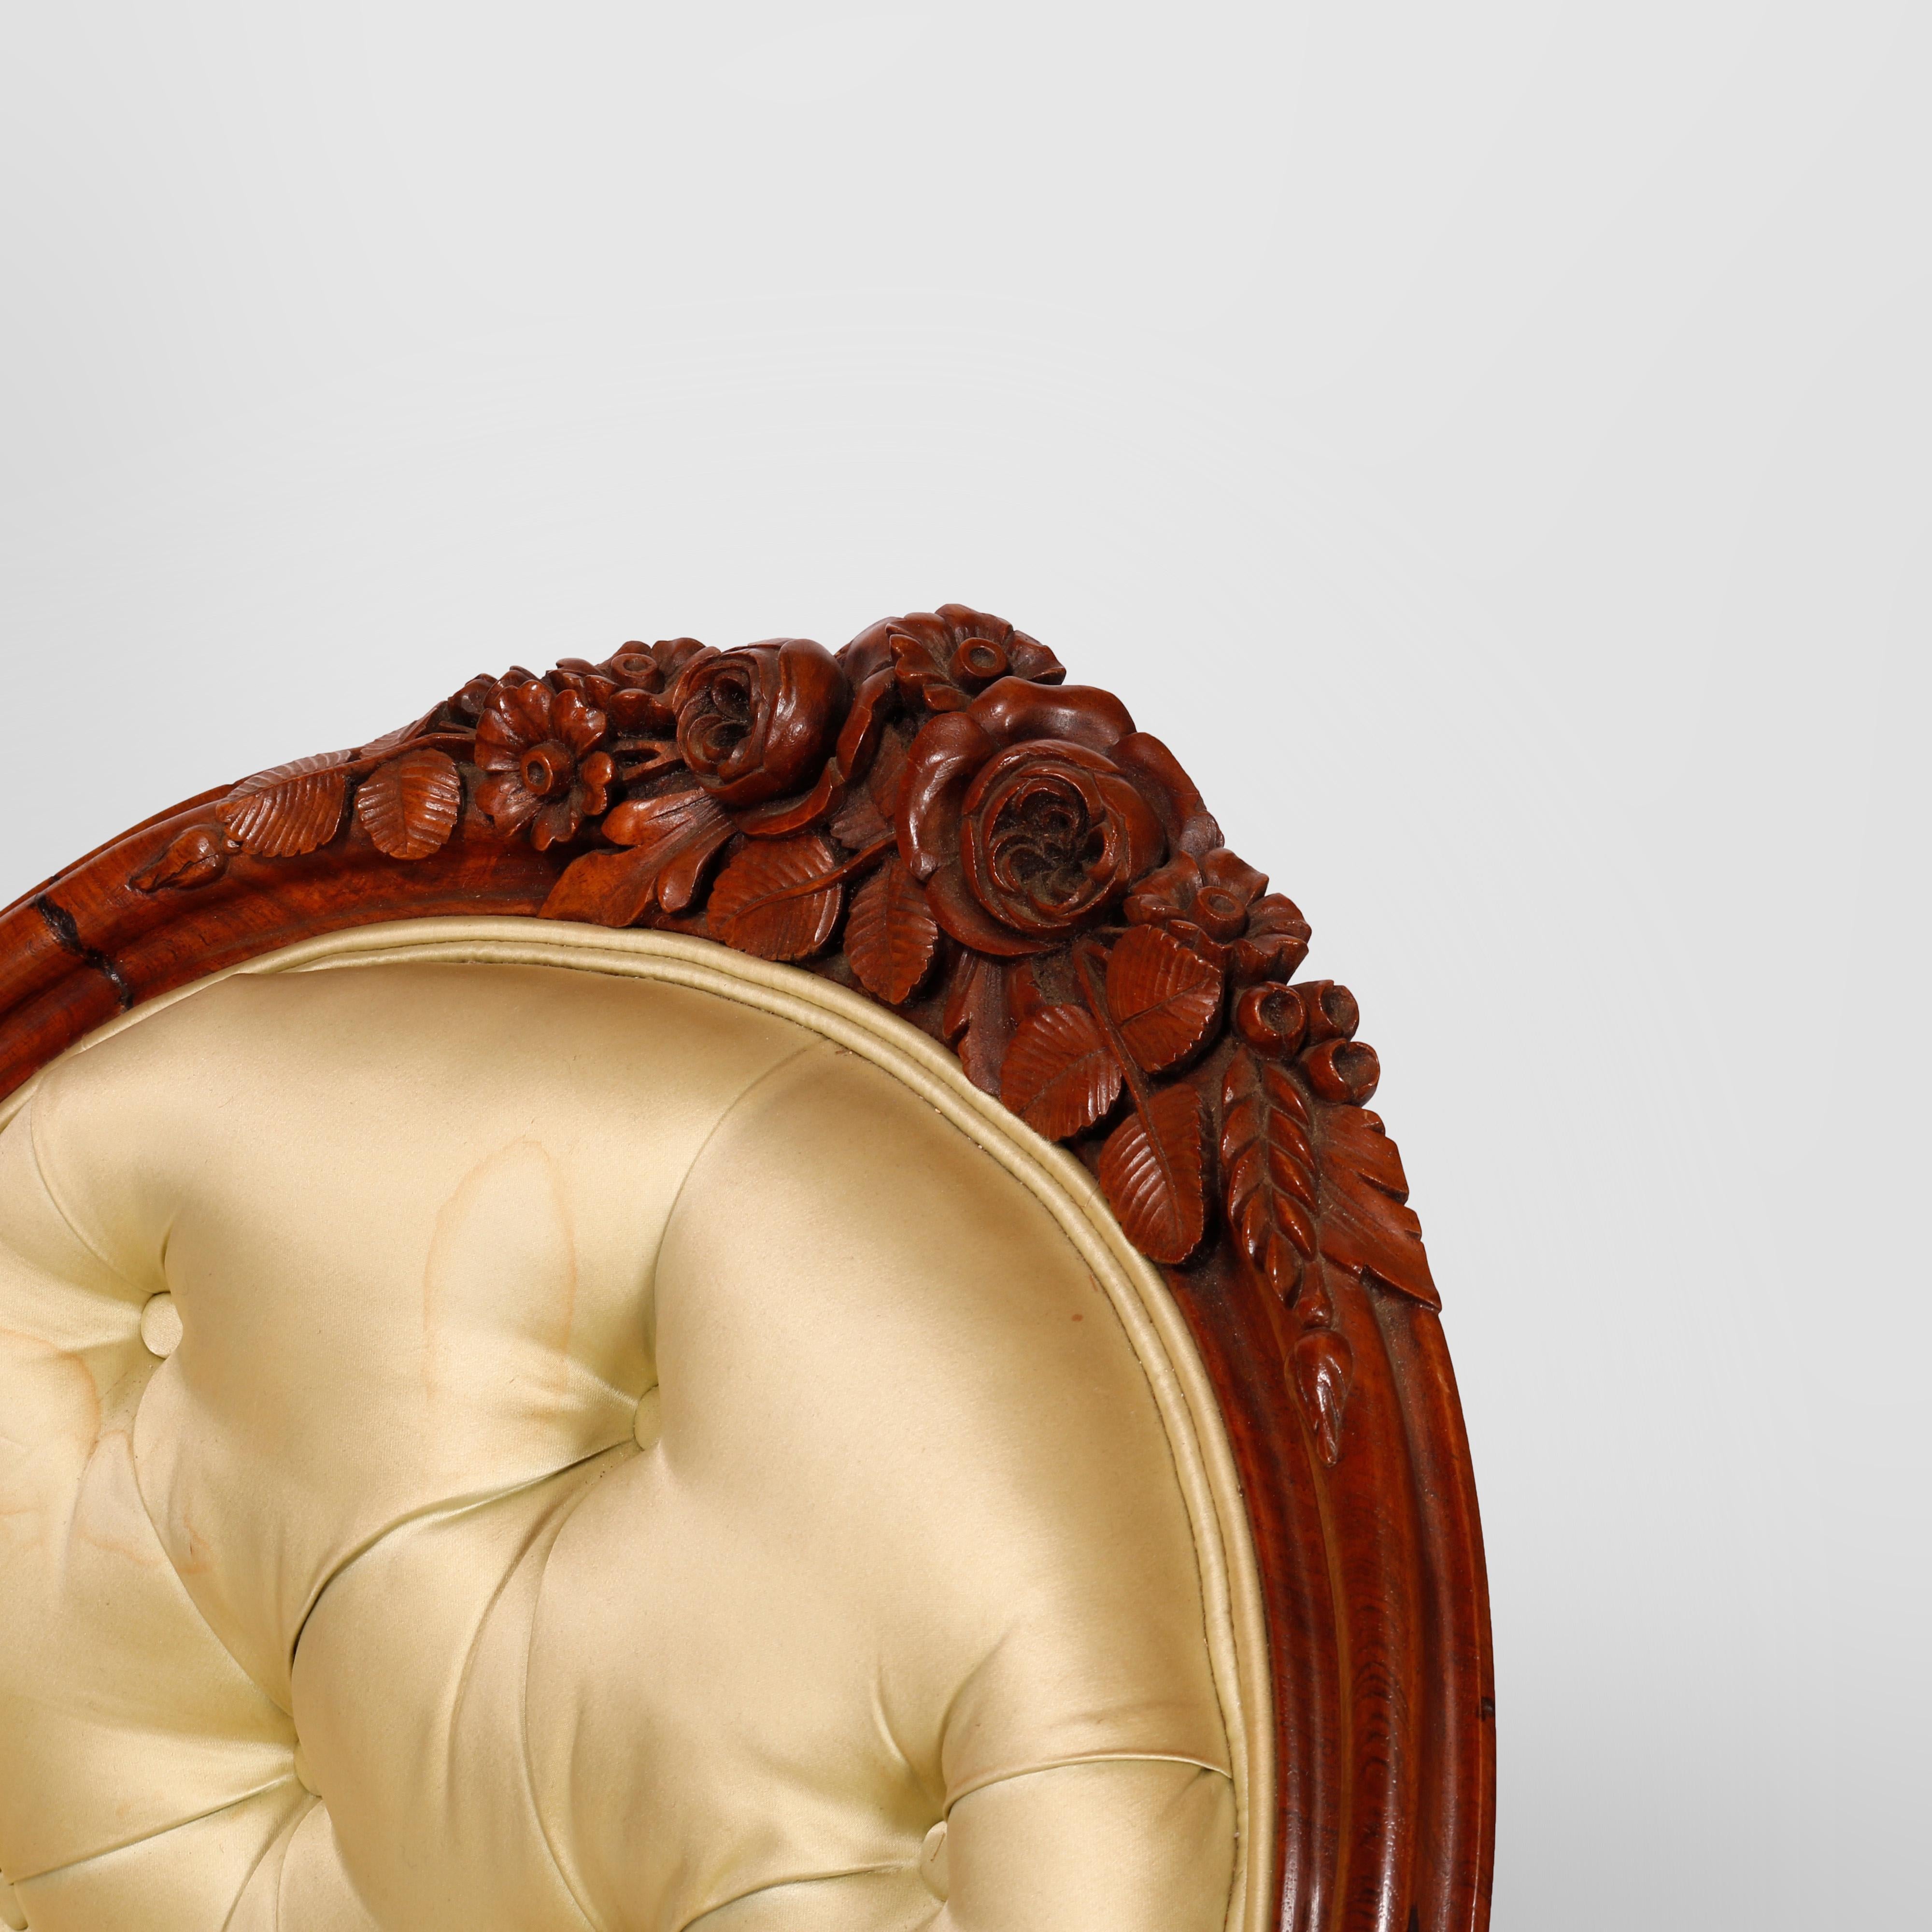 Antique Renaissance Revival Carved Rosewood Oval Back Medallion Settee c1880 For Sale 5